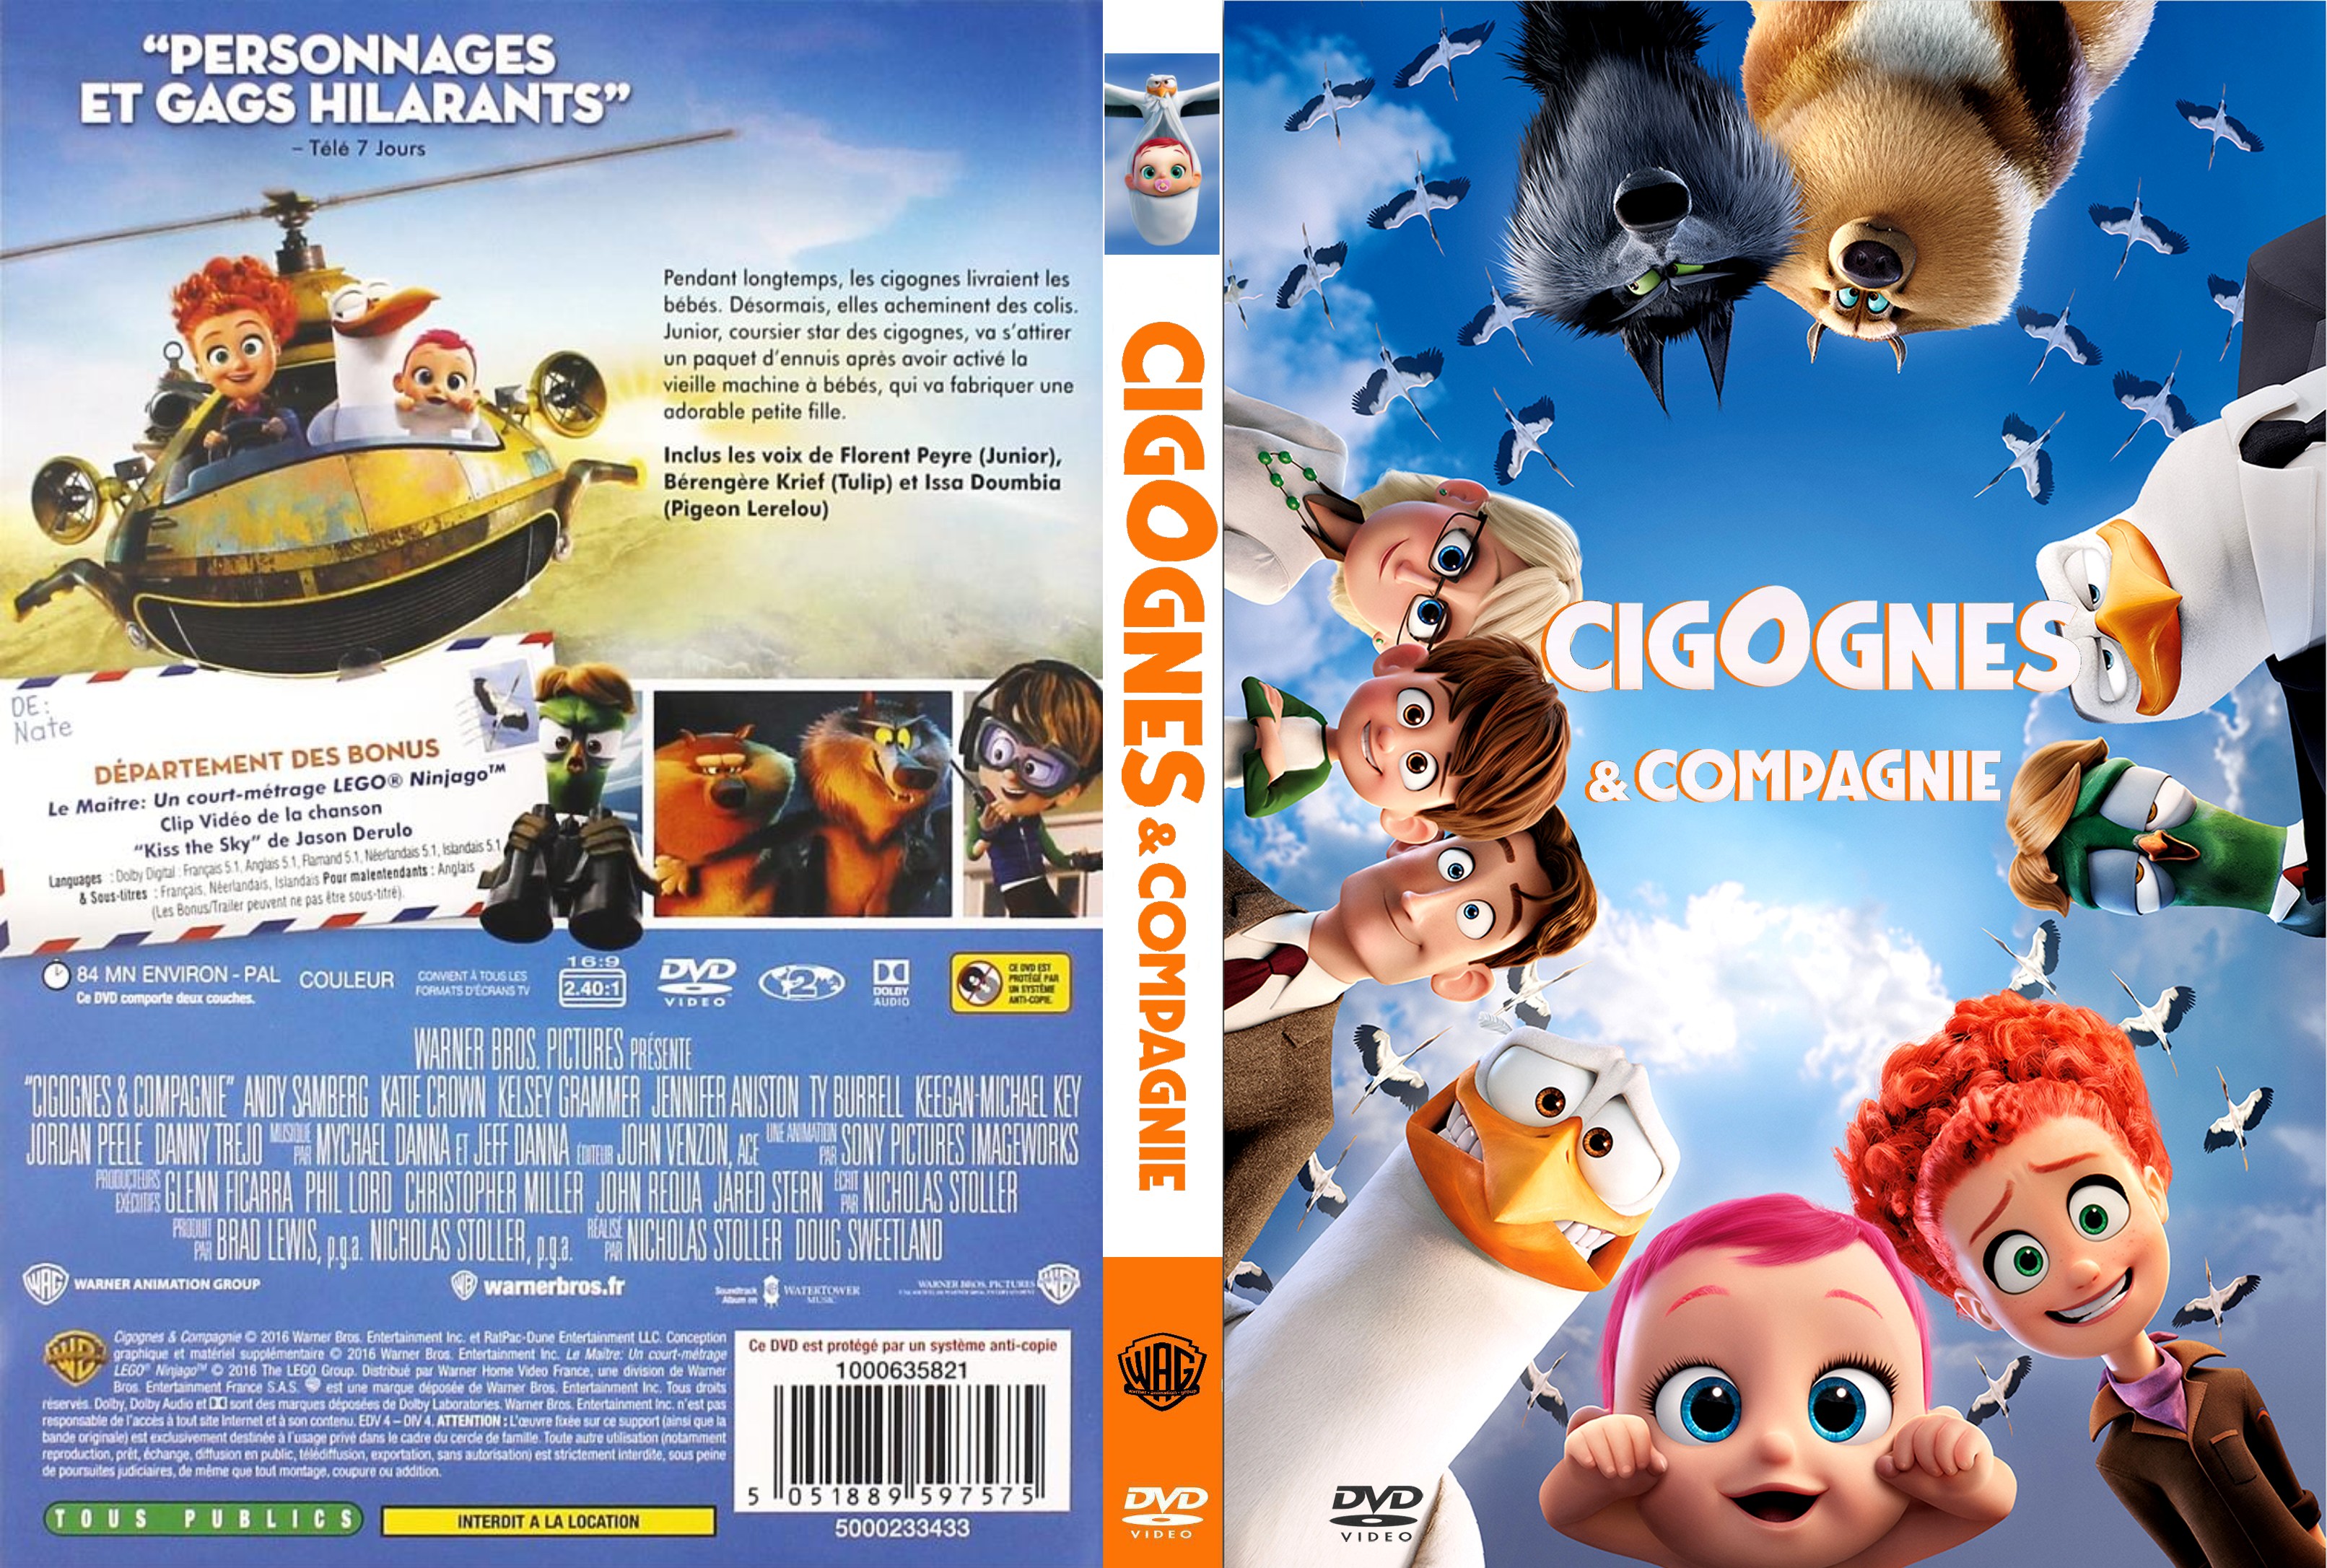 Jaquette DVD Cigognes et compagnie custom v2